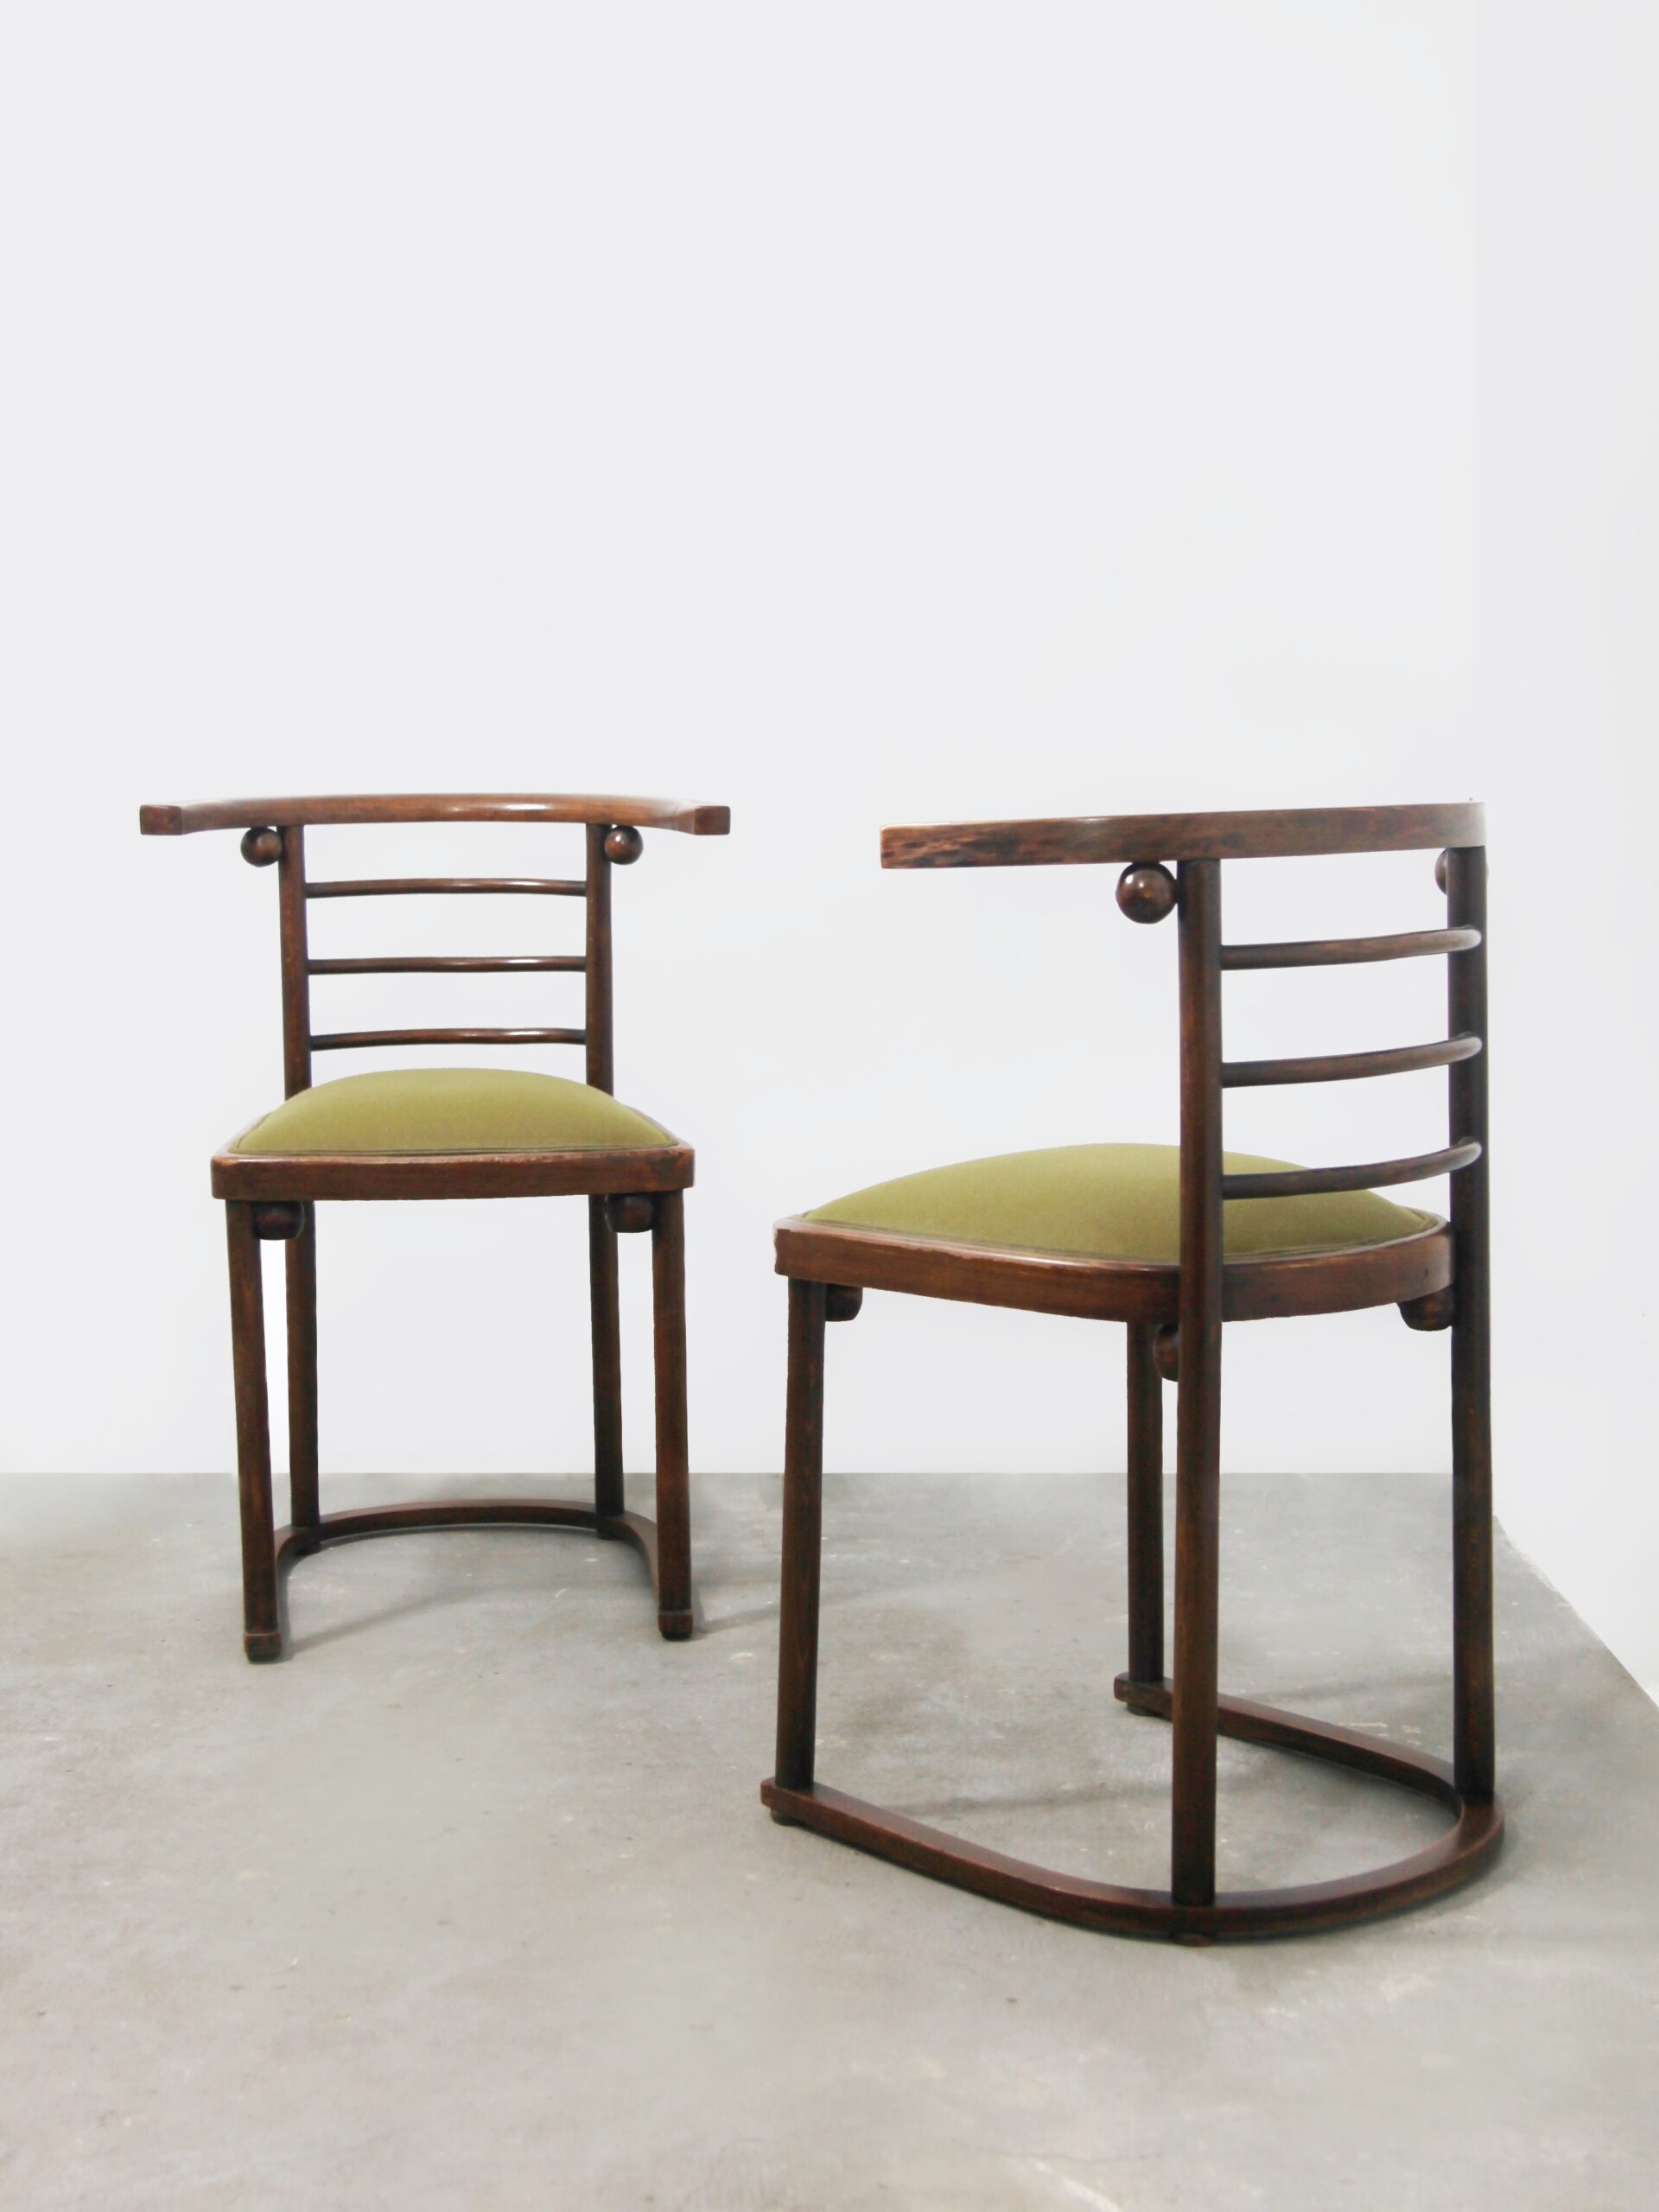 Pair of chairs mod. 728, known as “Fledermaus” HOFFMANN Josef